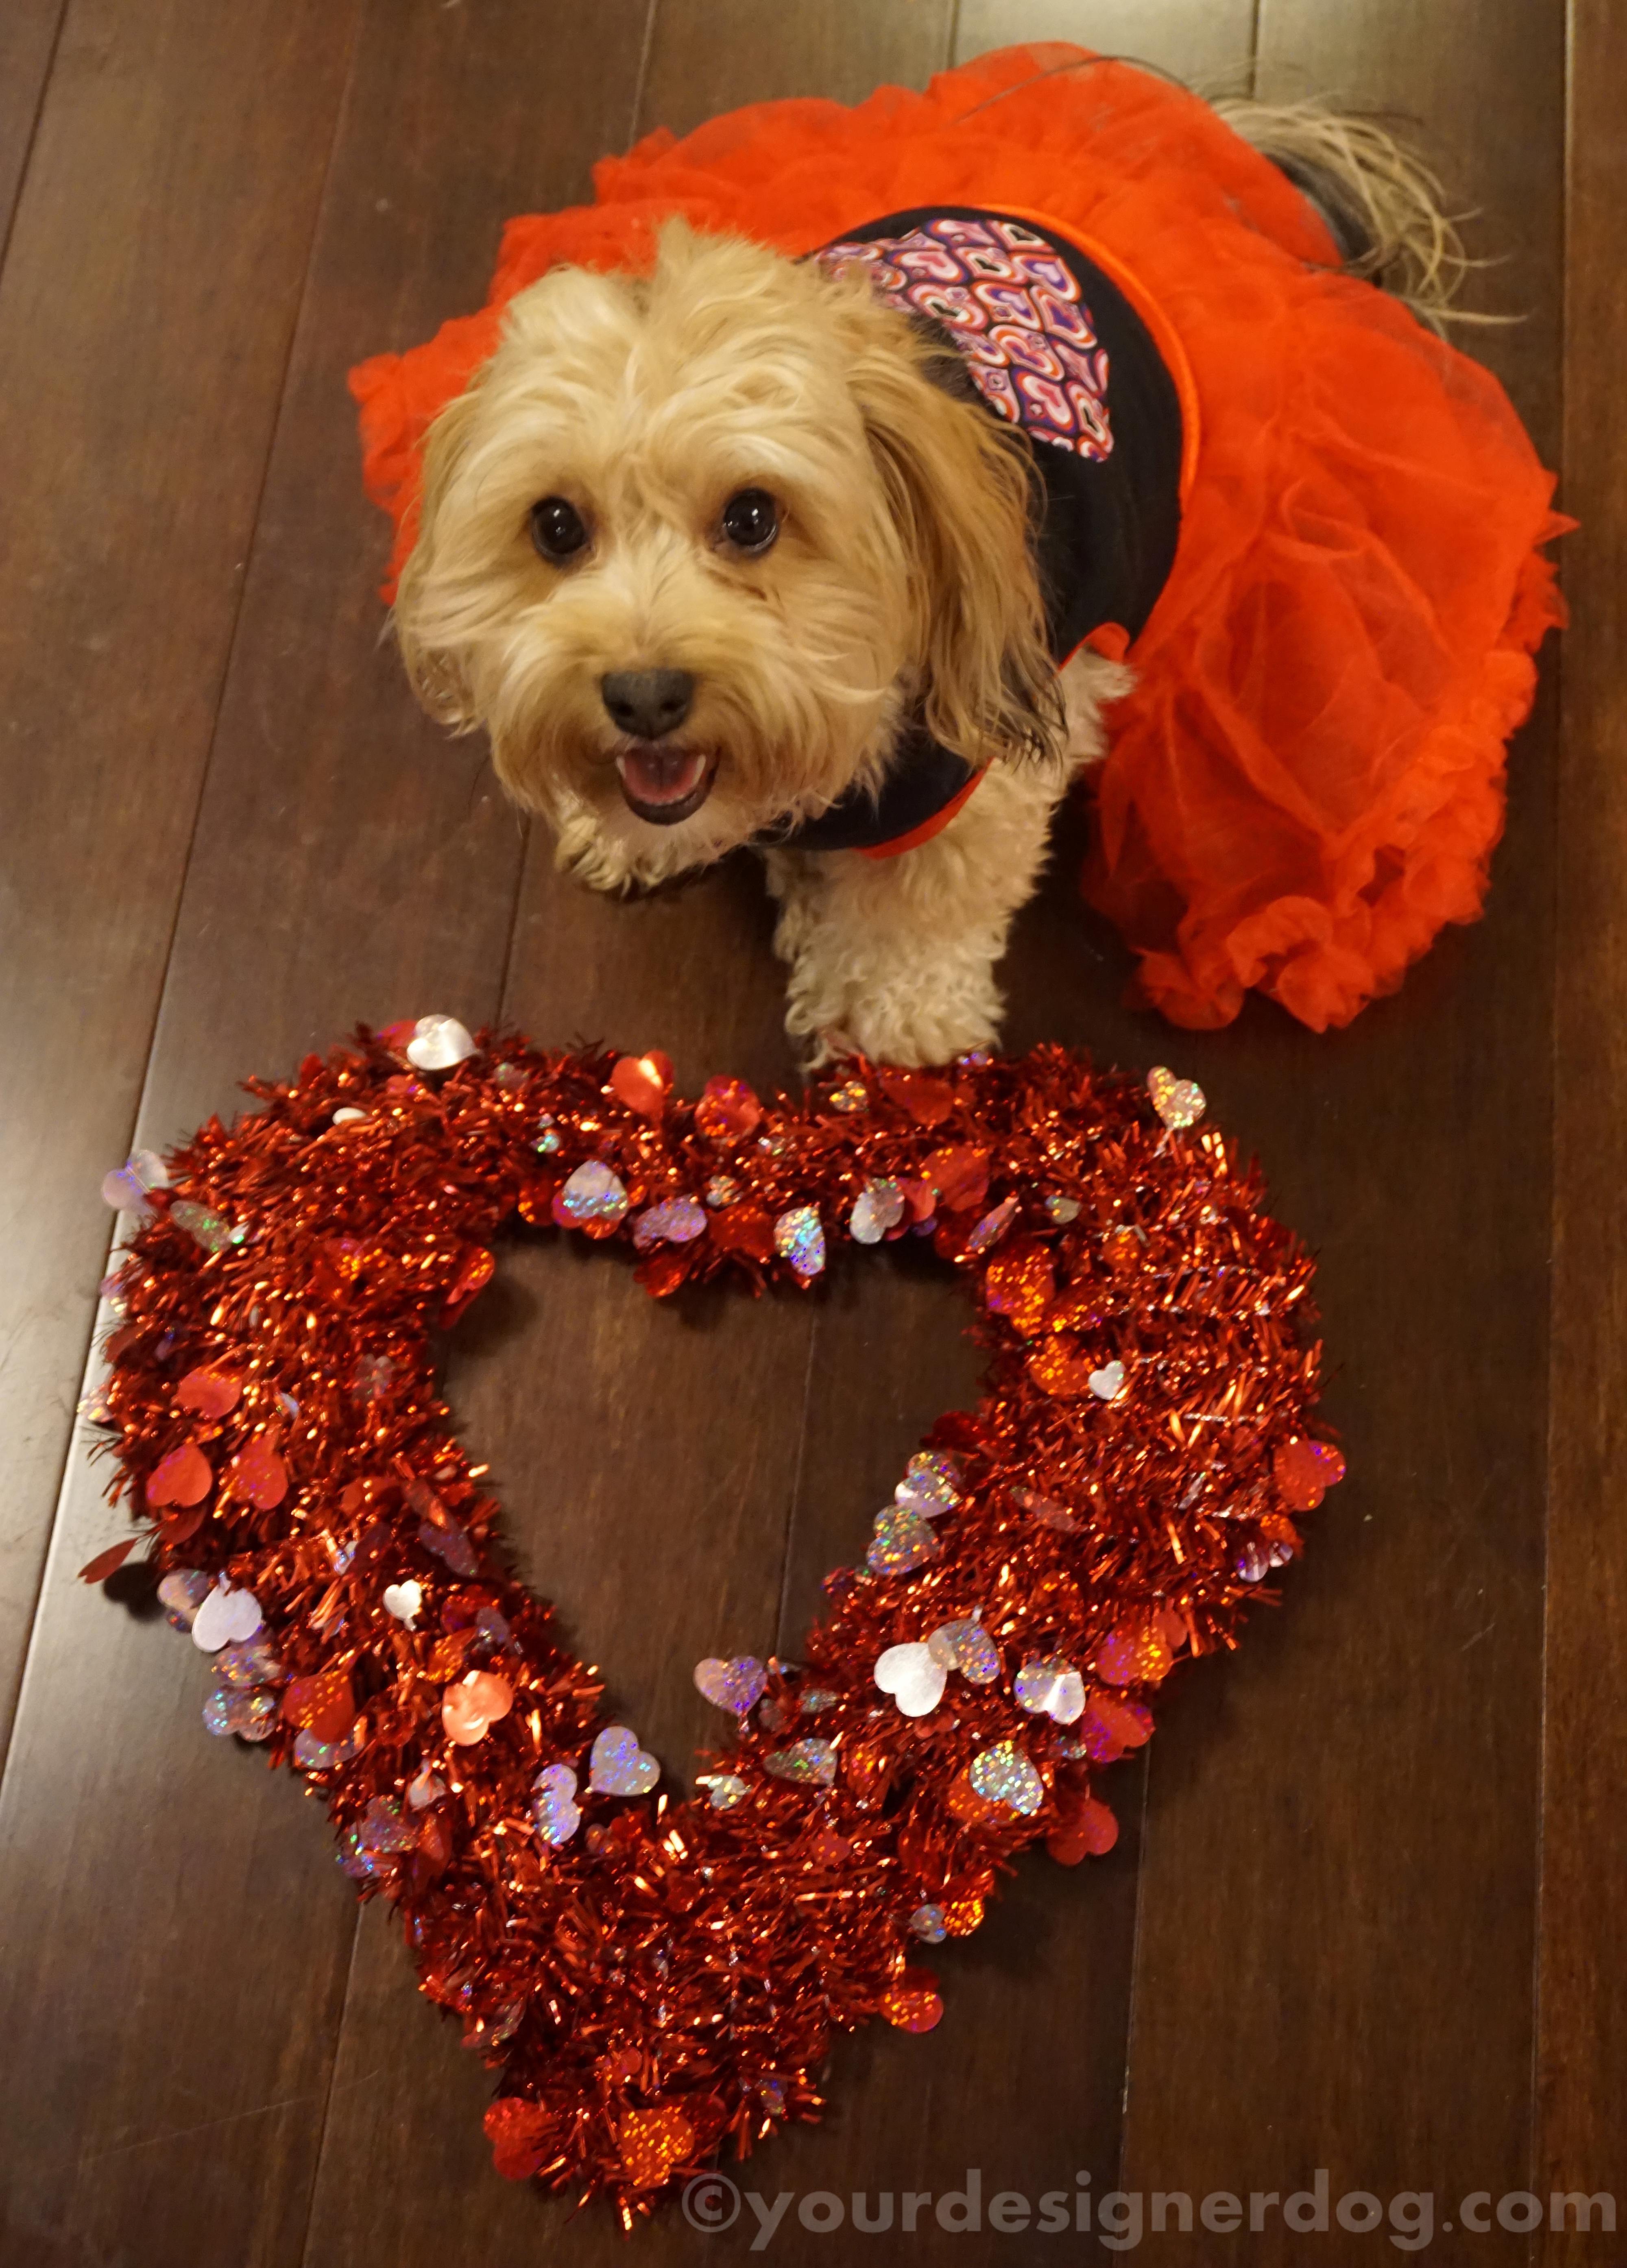 dogs, designer dogs, yorkipoo, yorkie poo, love, heart, dog smiling, valentine's day